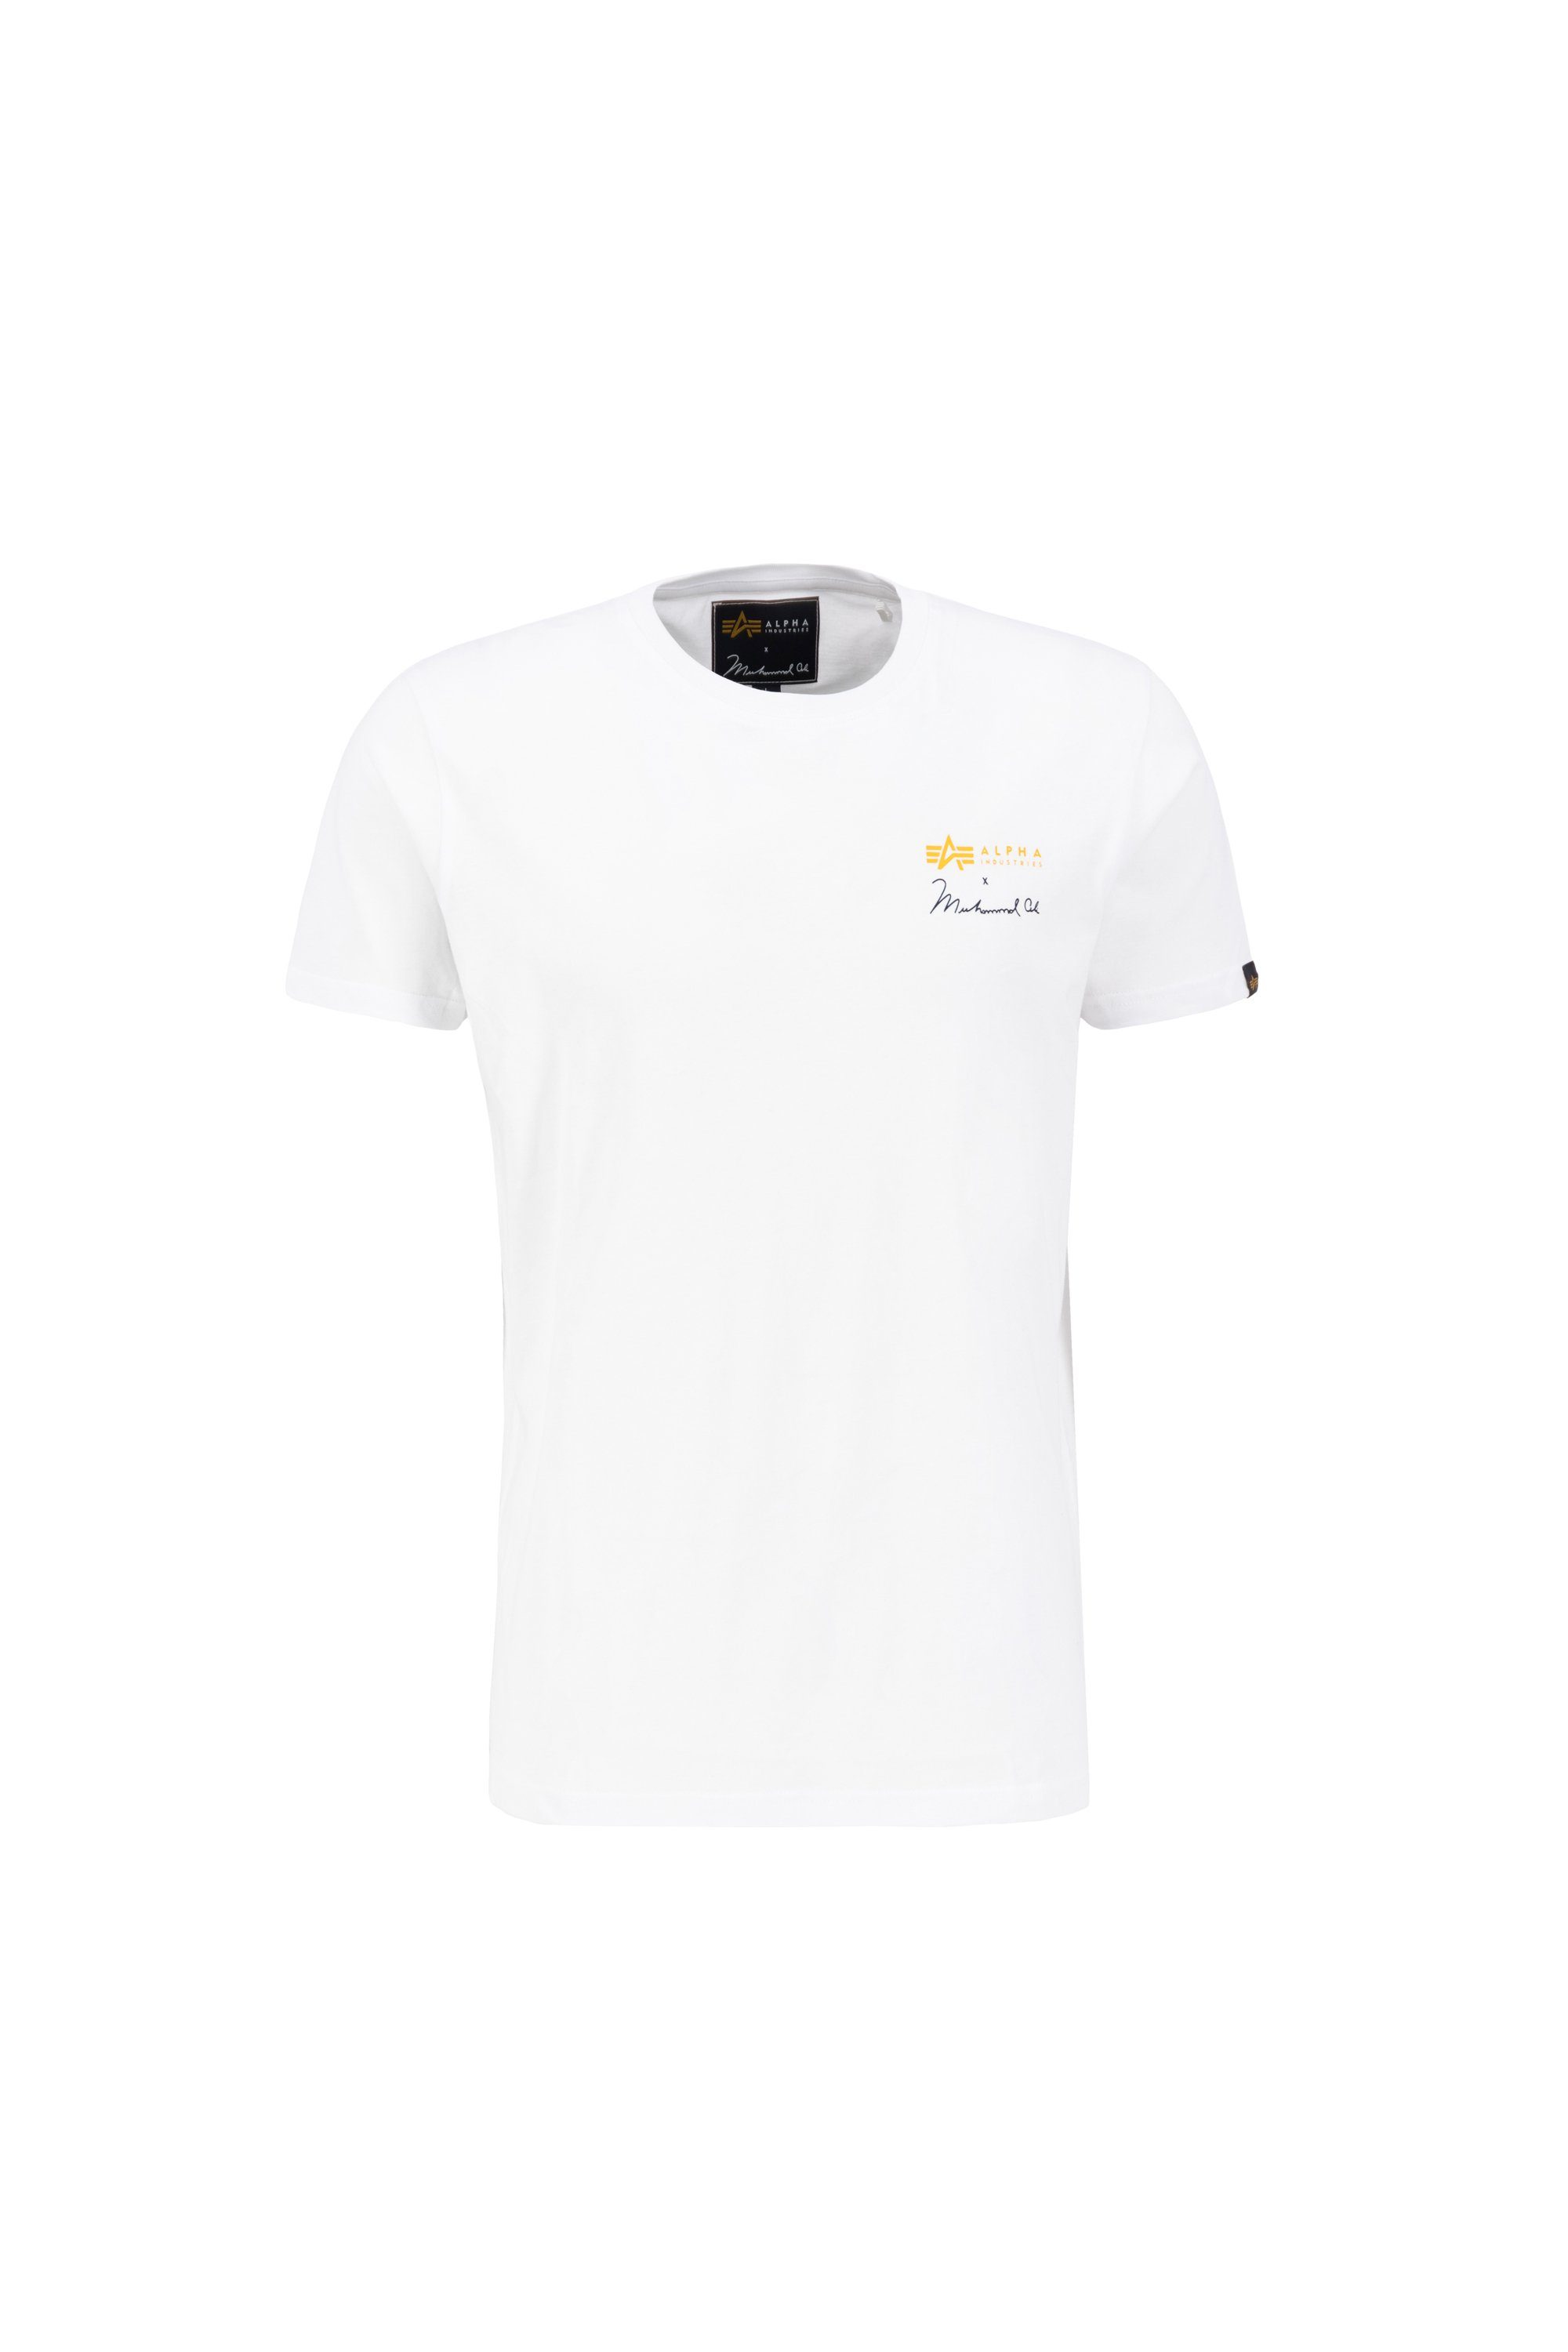 online - Alpha T T-Shirts BP OTTO Ali Alpha Industries Men T-shirt | Industries shop Muhammad